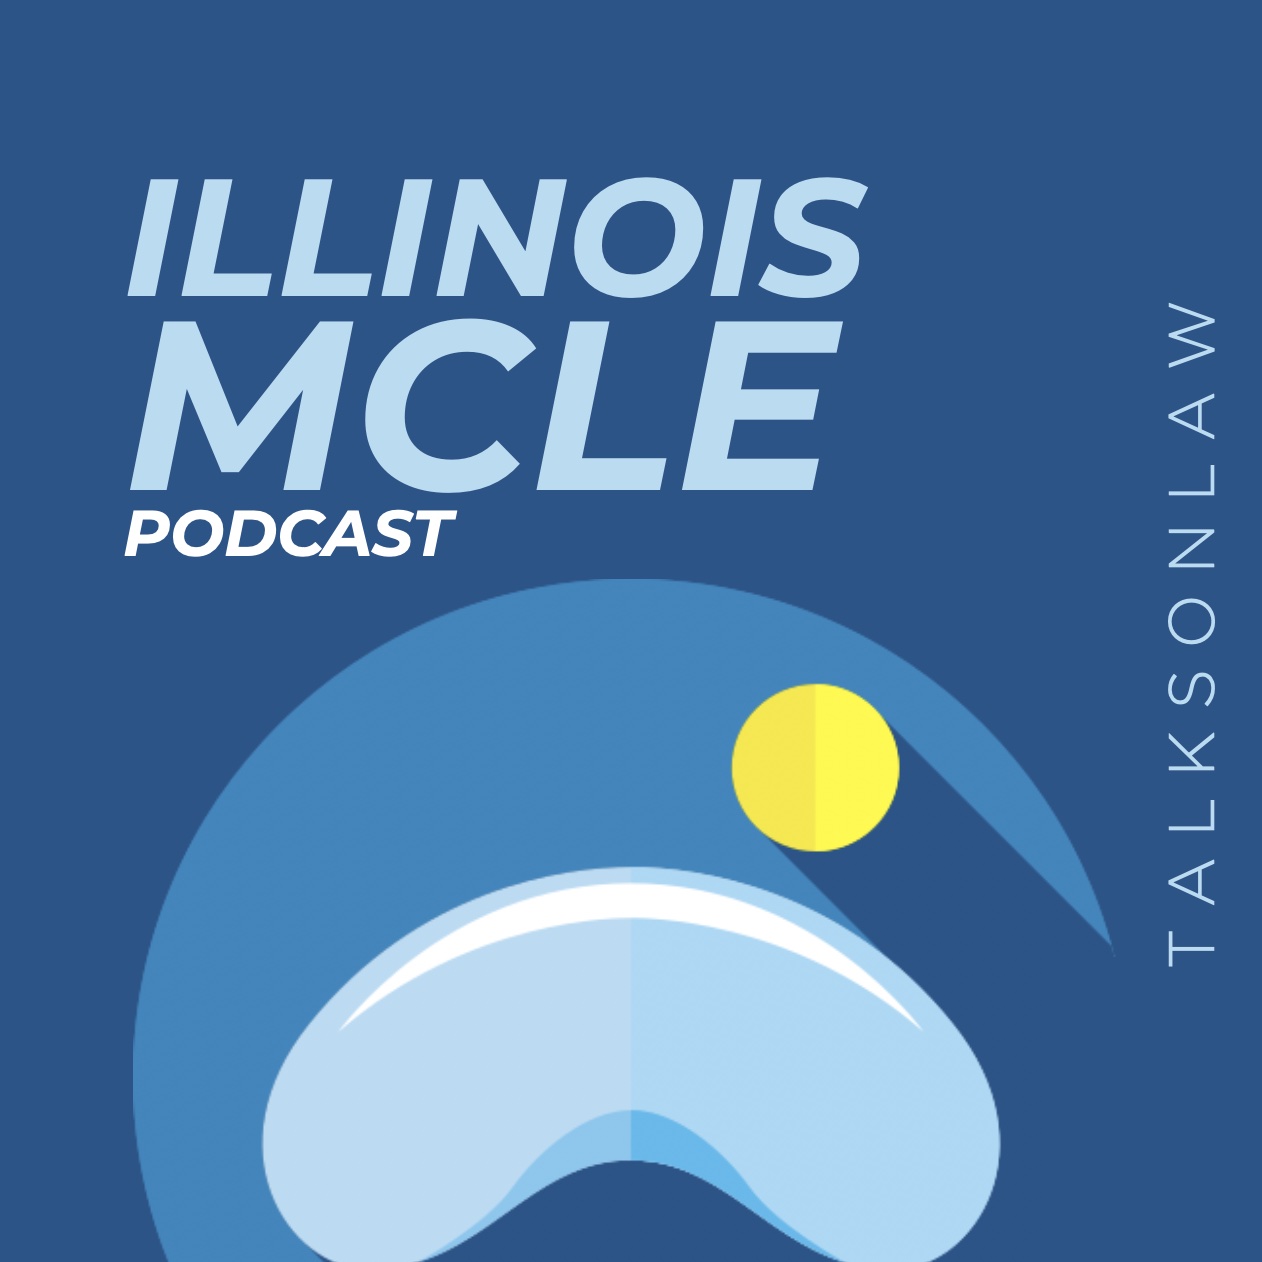 Illinois mcle podcast logo